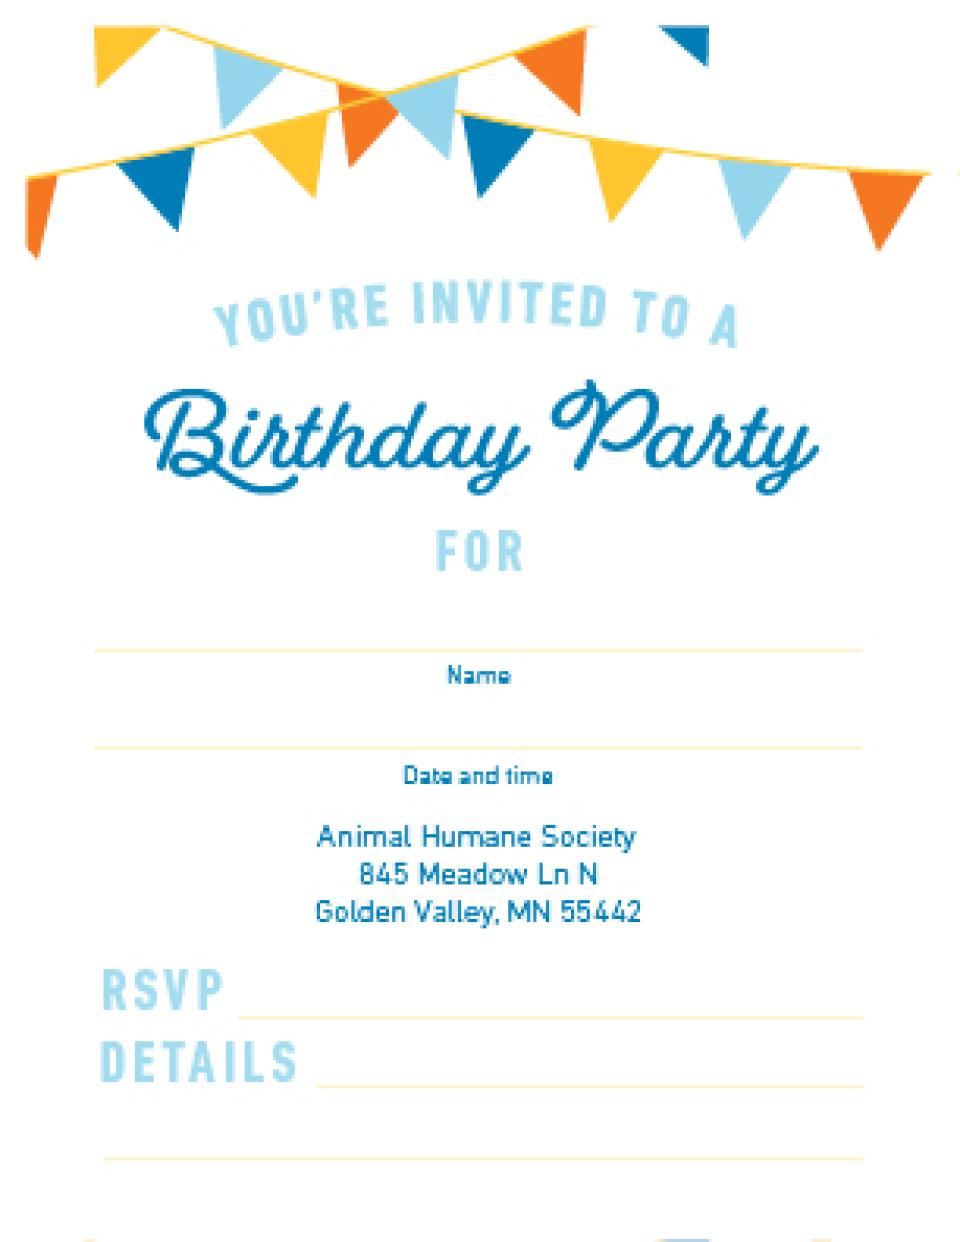 AHS birthday party print invitation